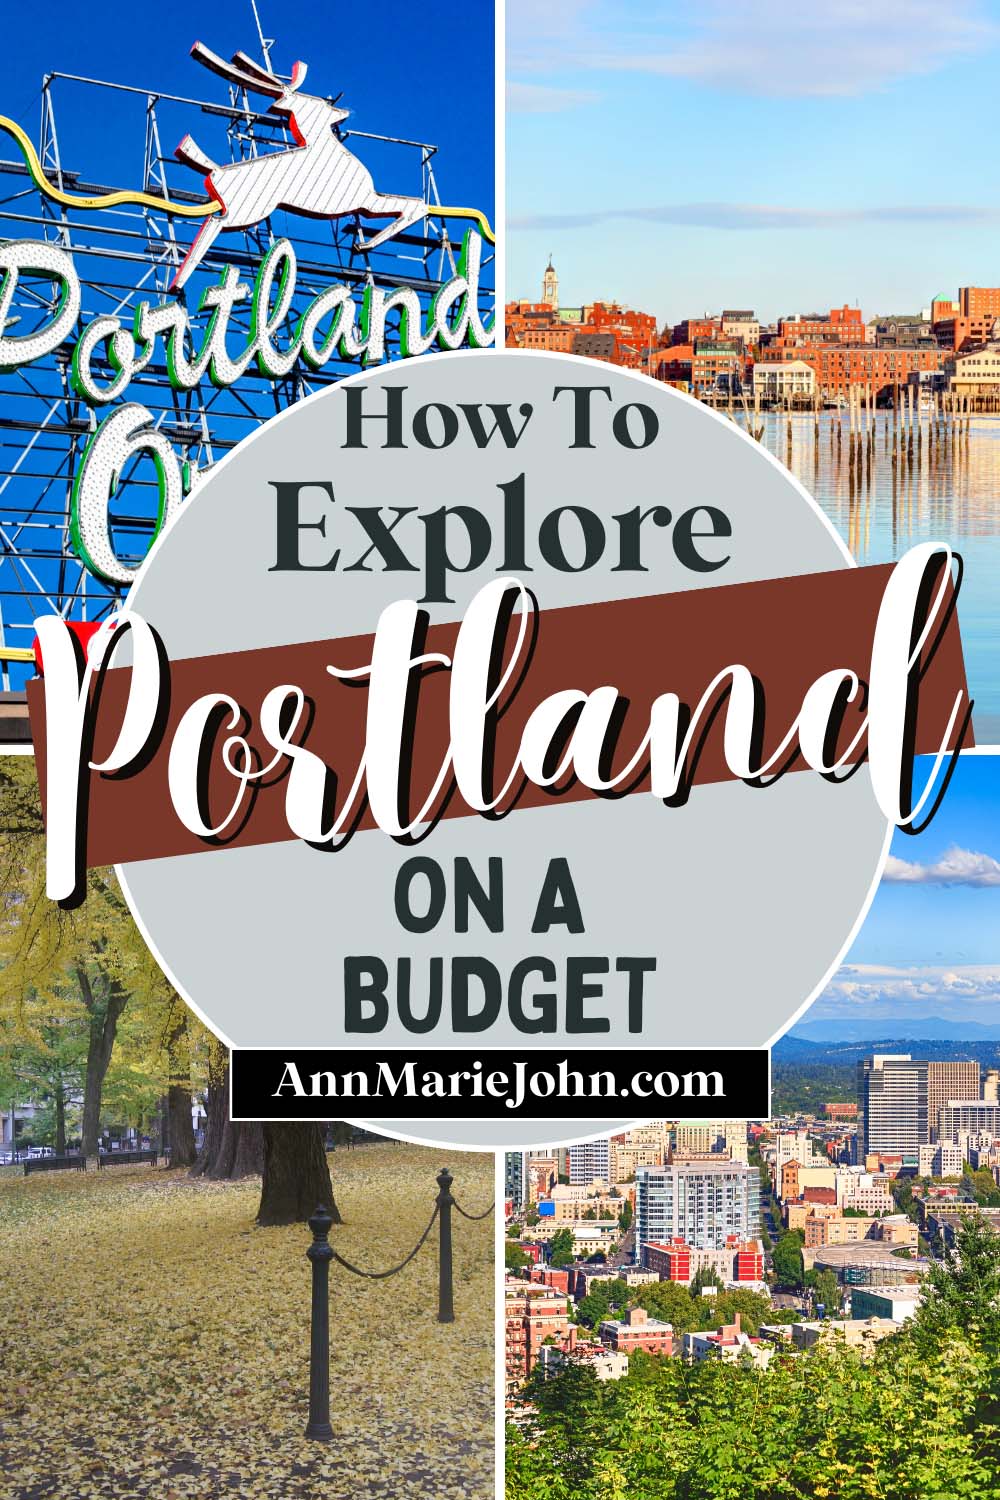 How to Explore Portland on a Budget